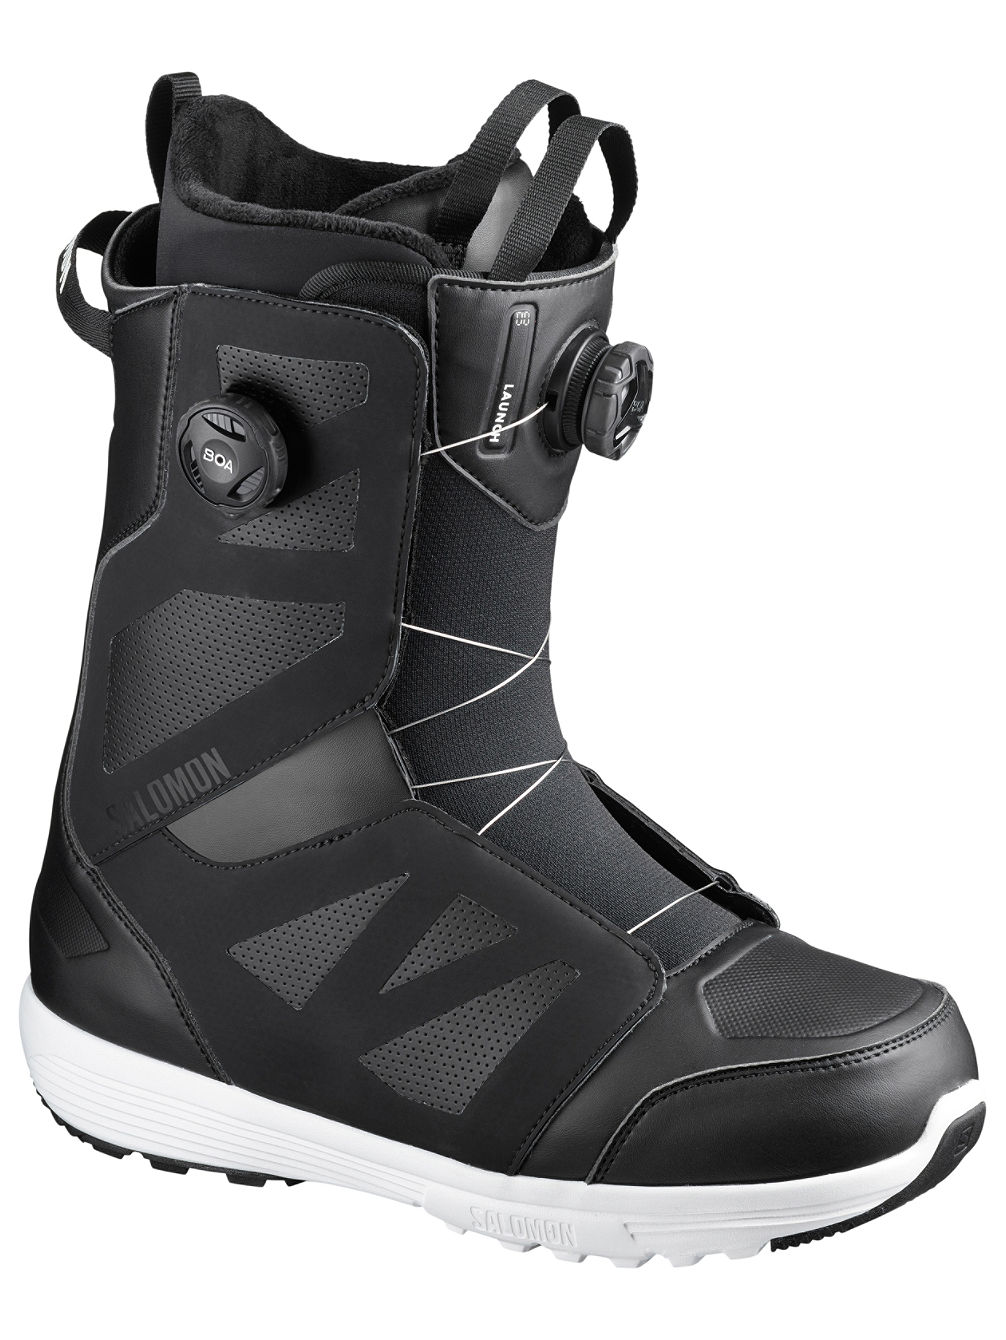 Launch Boa SJ Snowboard Boots